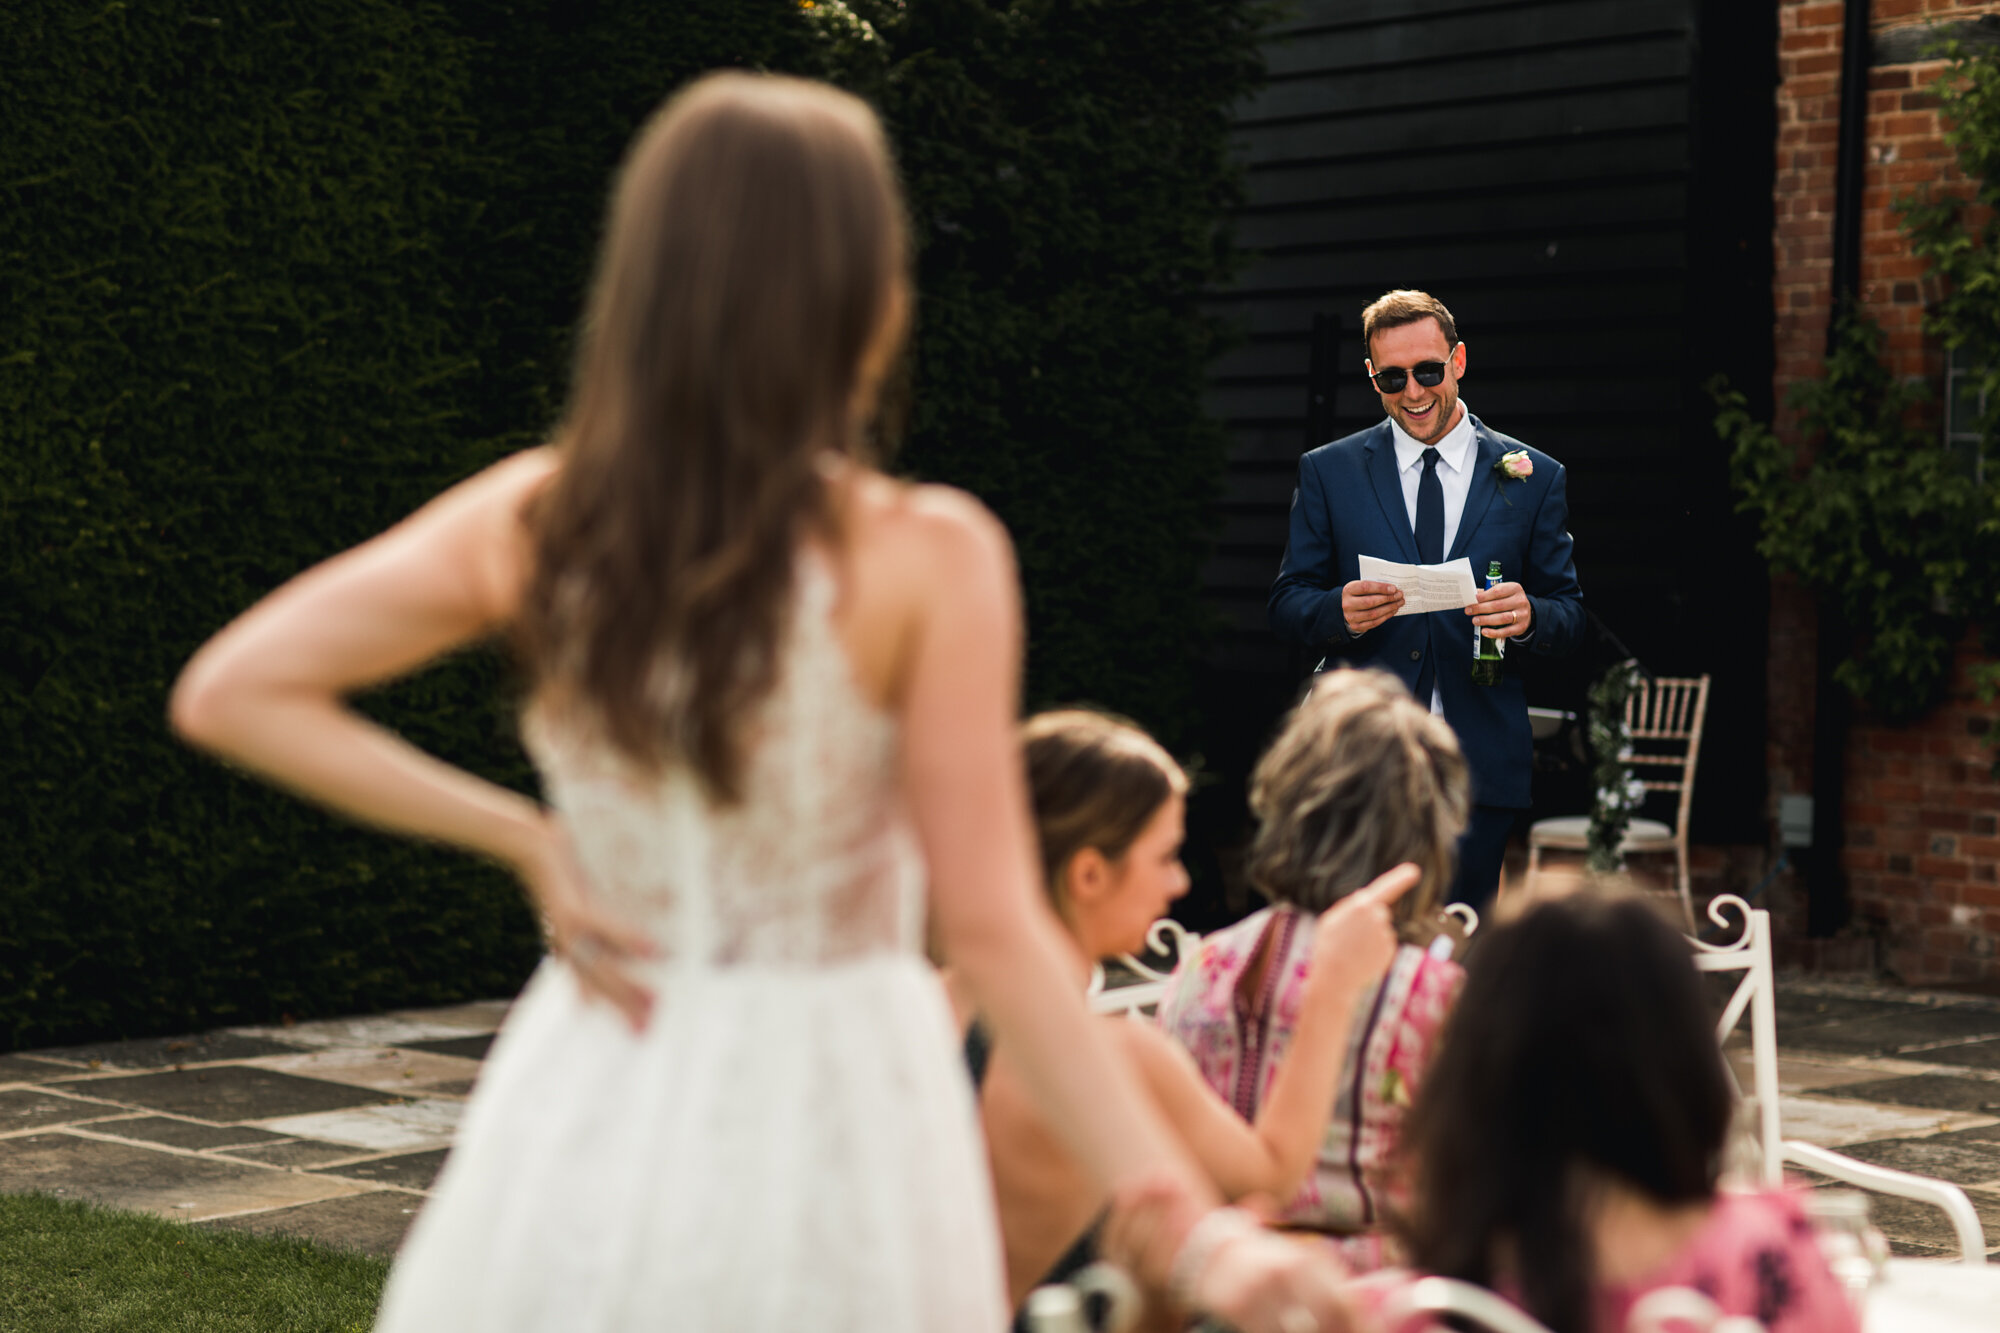 outdoor wedding speeches, relaxed wedding, outdoor wedding